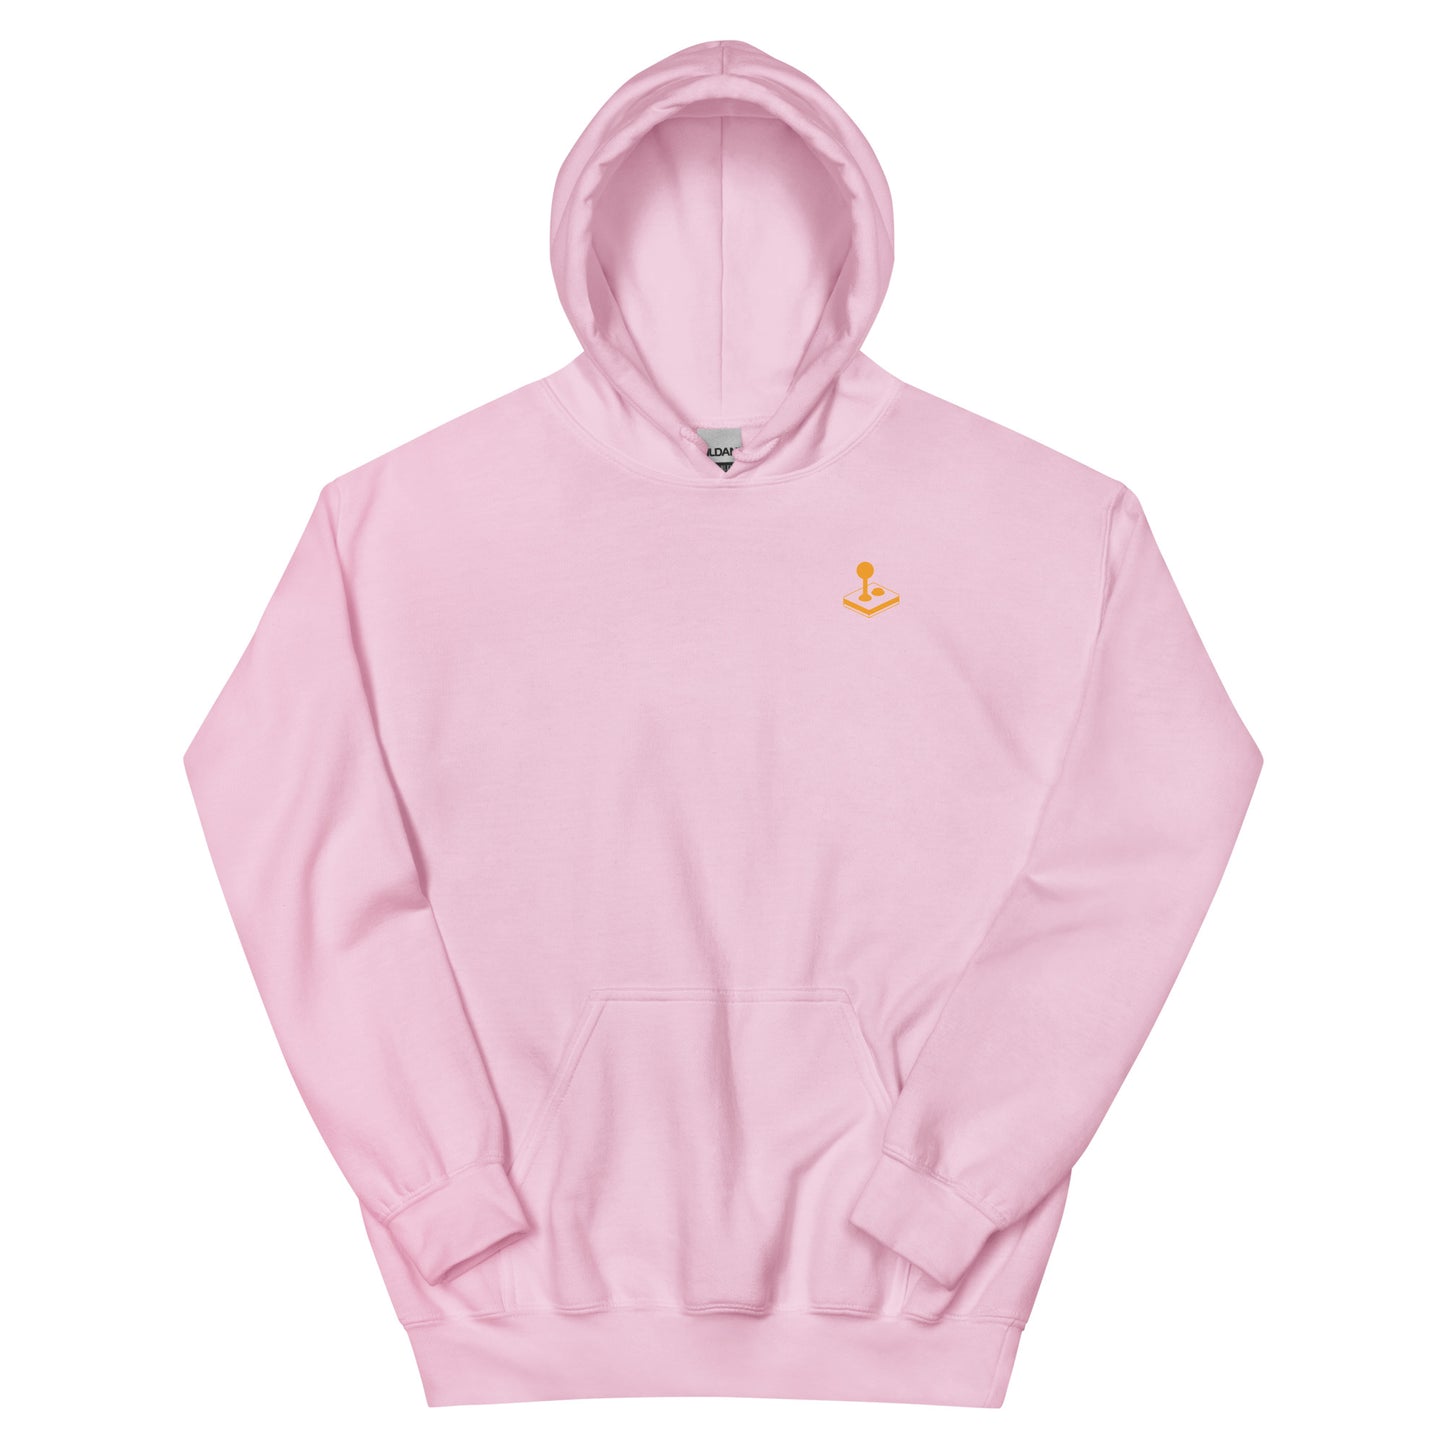 Joystick unisex hoodie